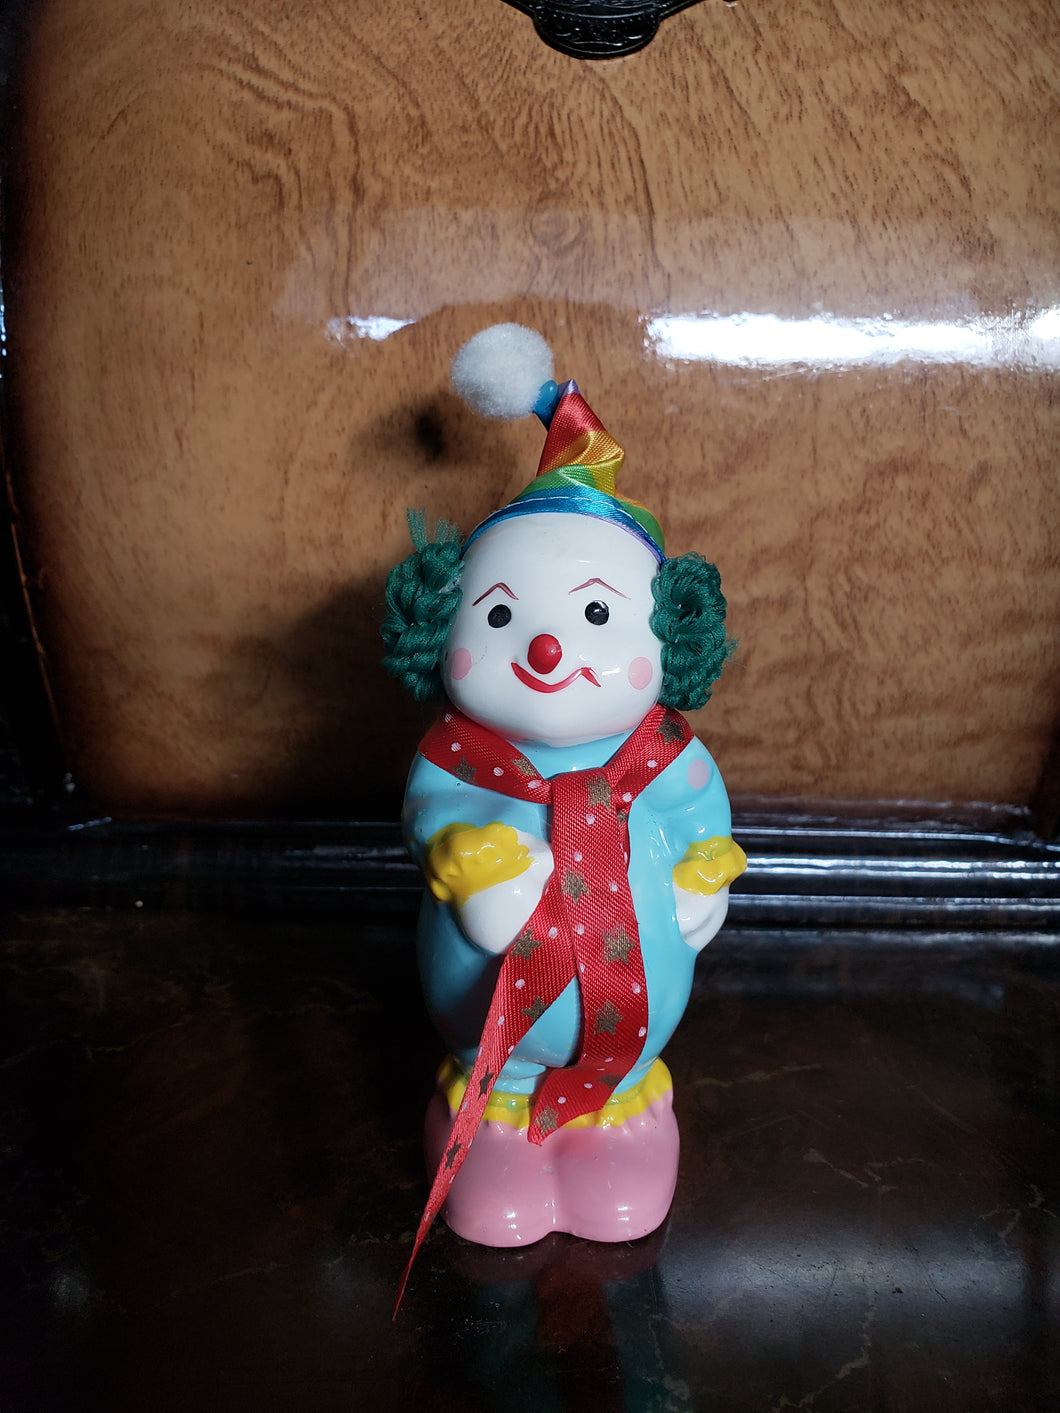 Clown Figurine